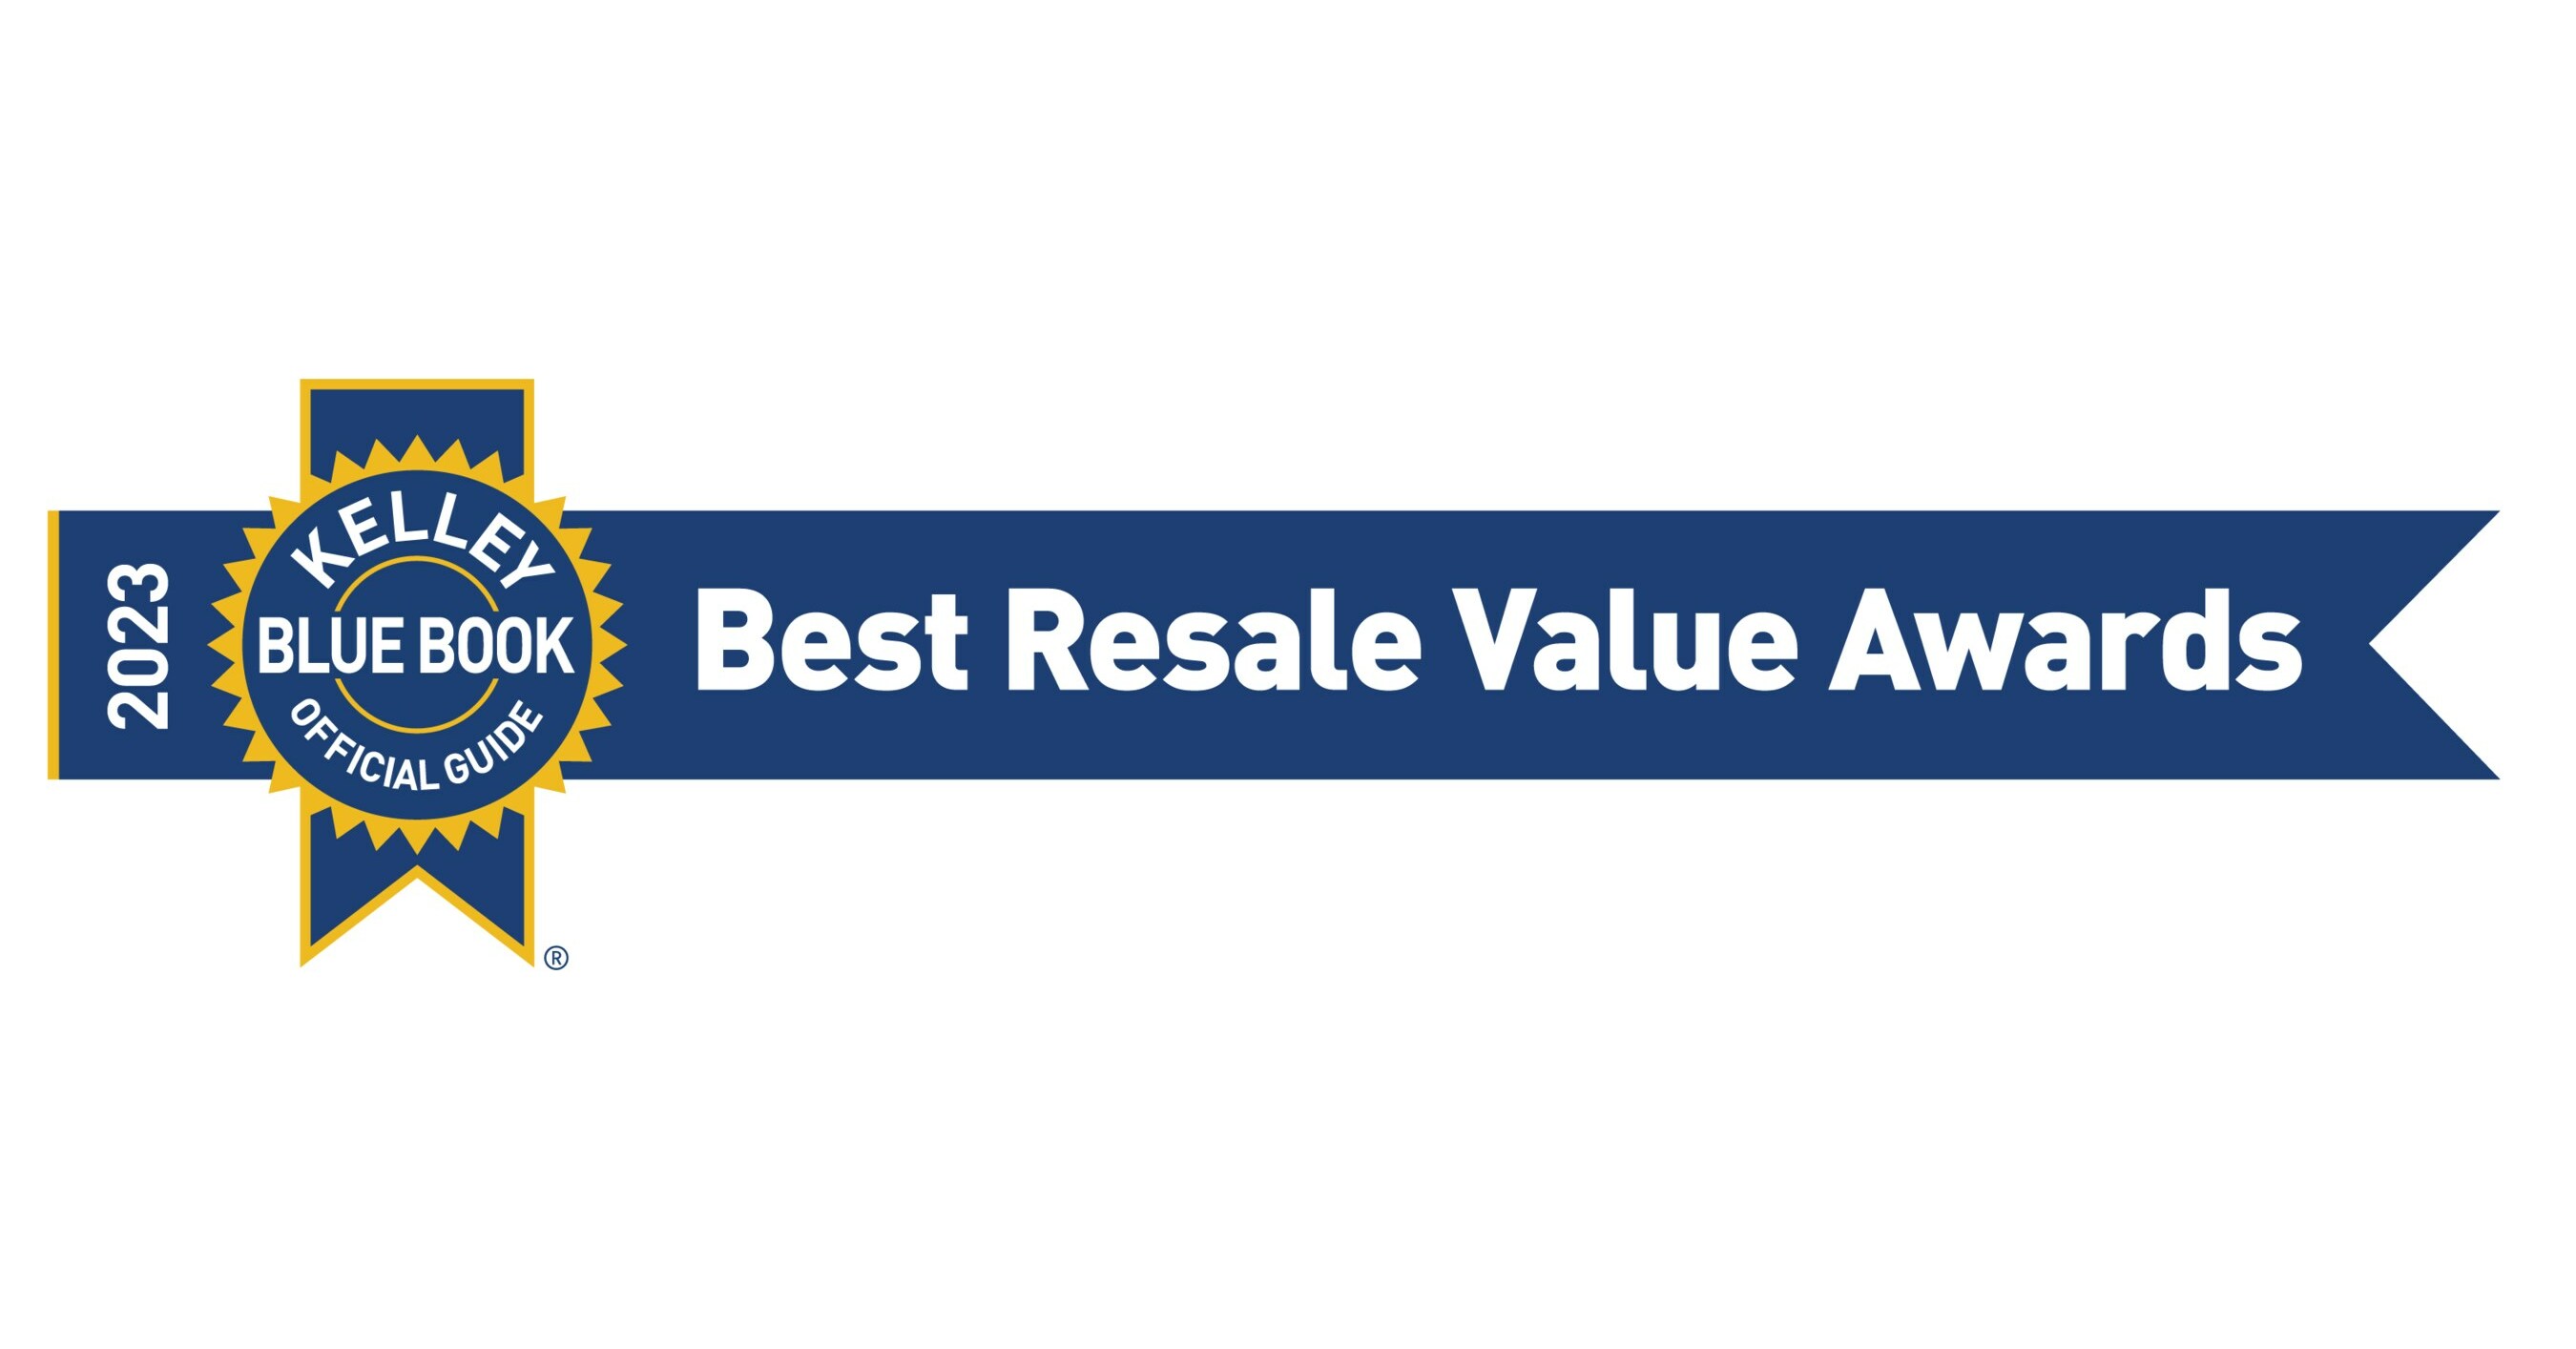 best resale value